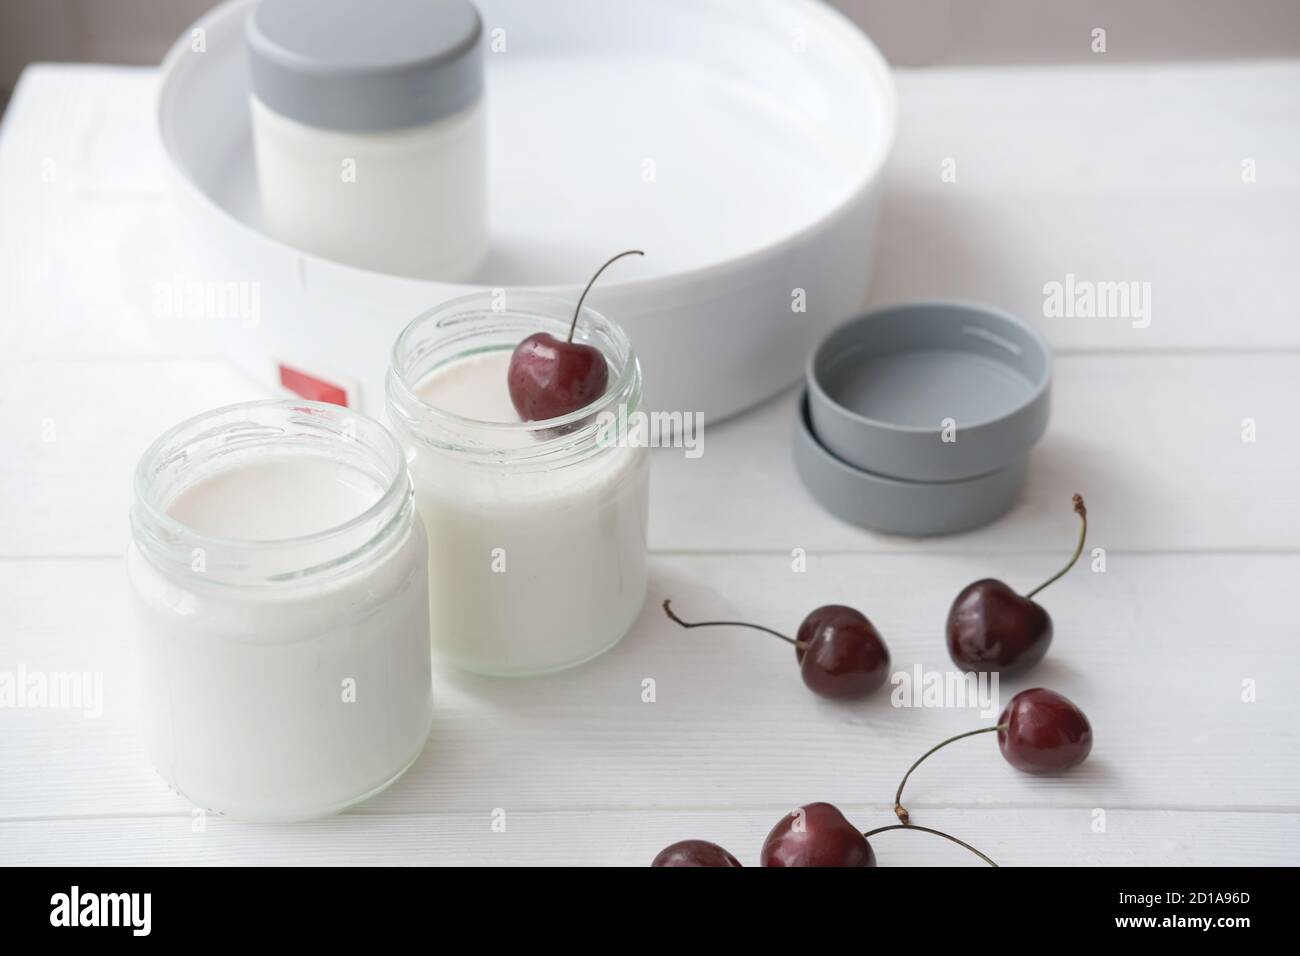 homemade organic yogurt in glass jars in yogurt maker. automatic yogurt machine to make fermented milk product at home. yogurt or kefir making during quarantine concept. cherries near glass jars. Stock Photo